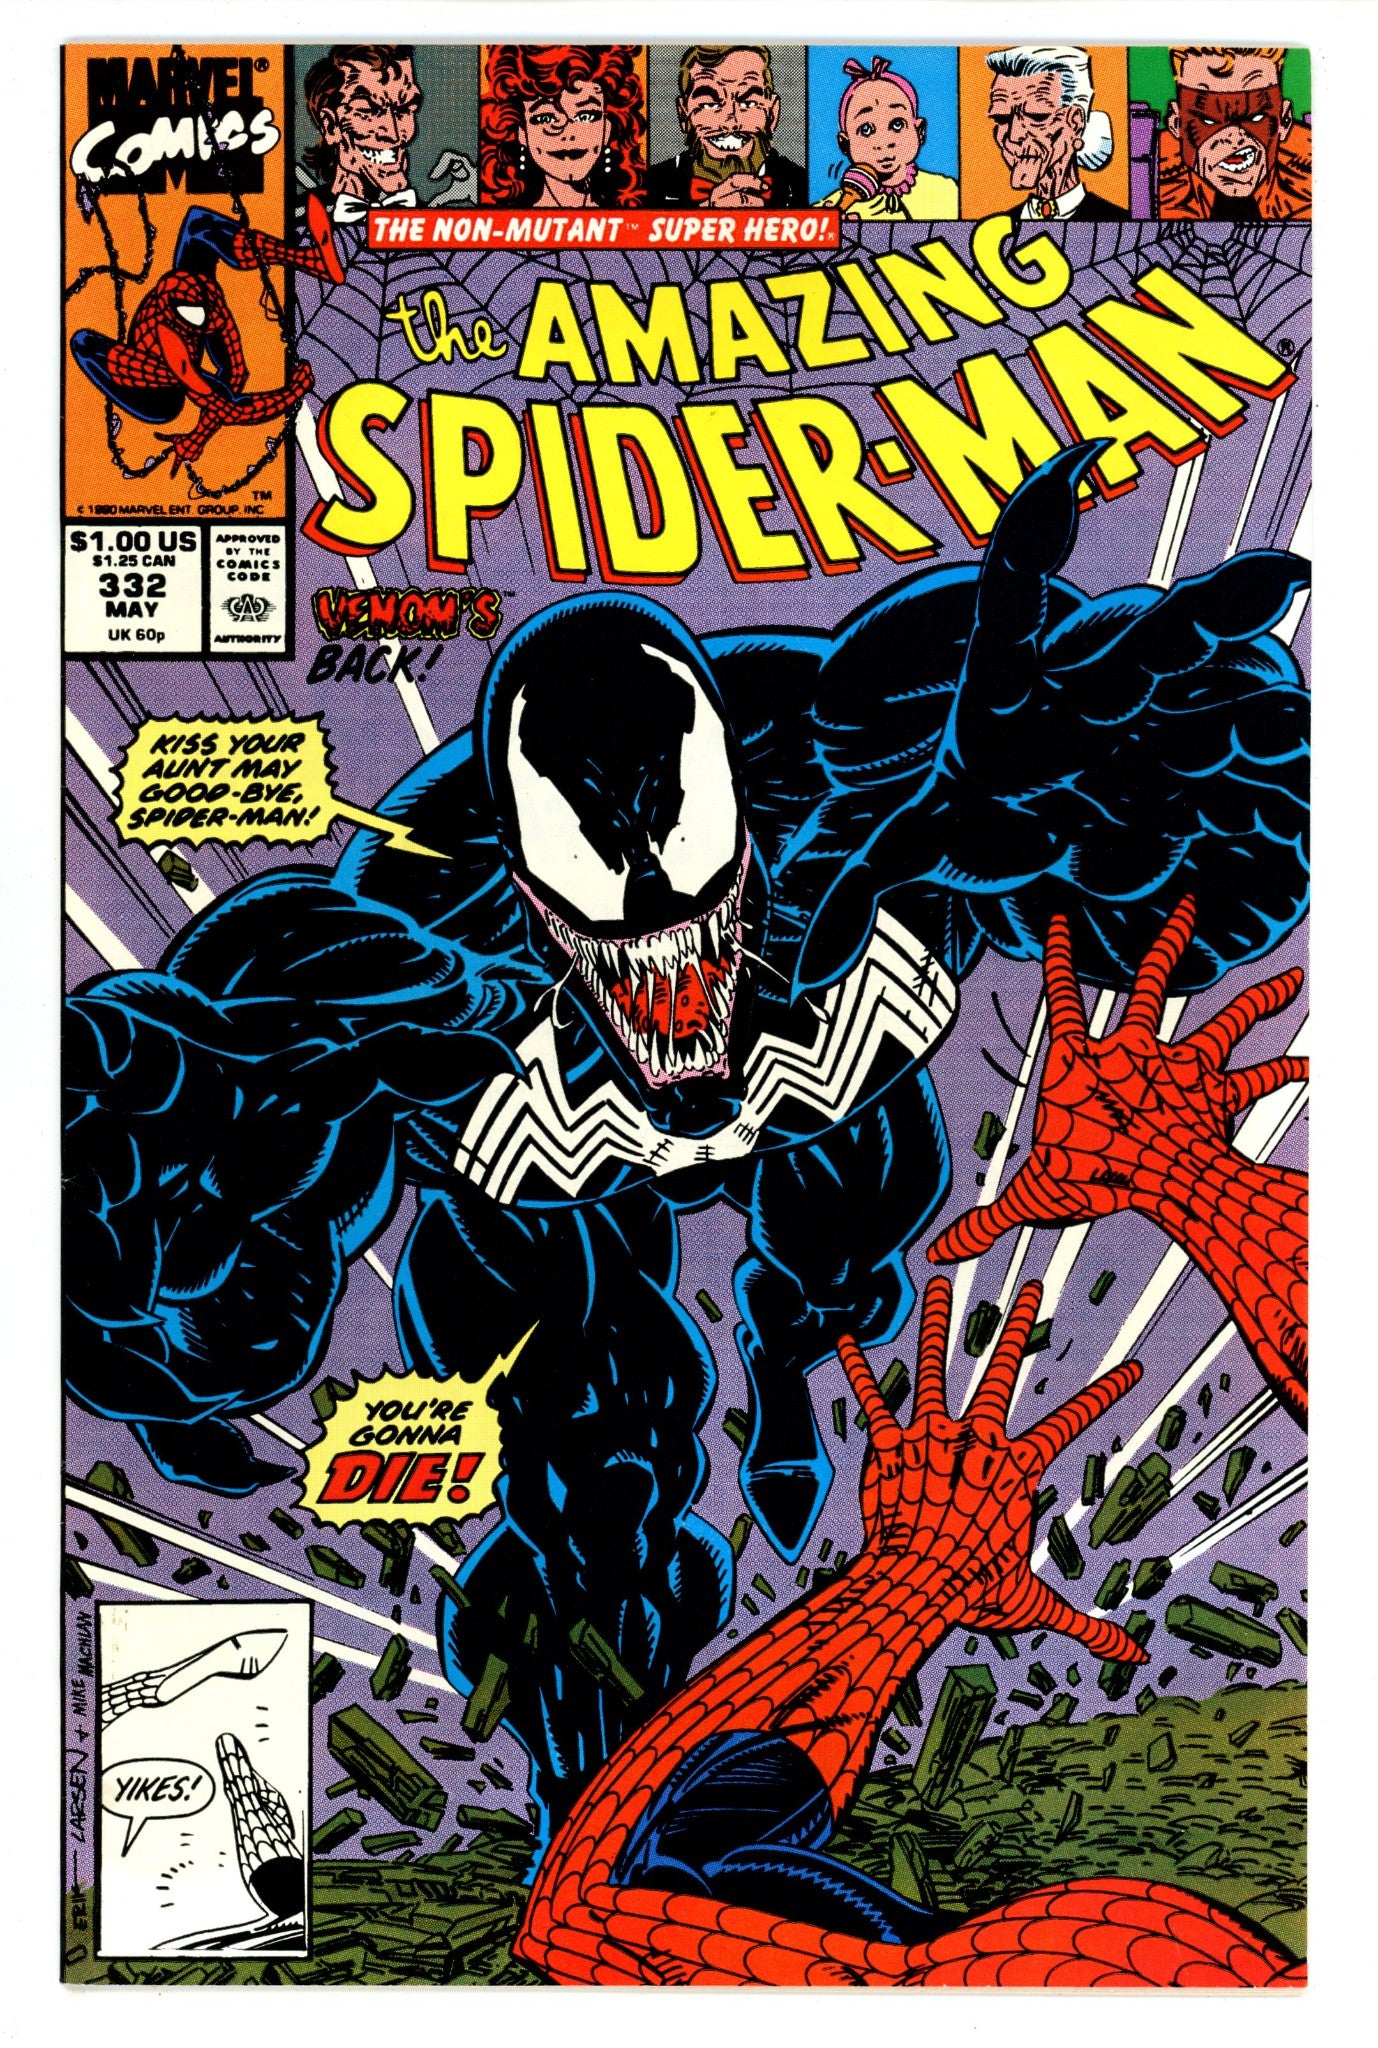 The Amazing Spider-Man Vol 1 332 VF- (7.5) (1990) 